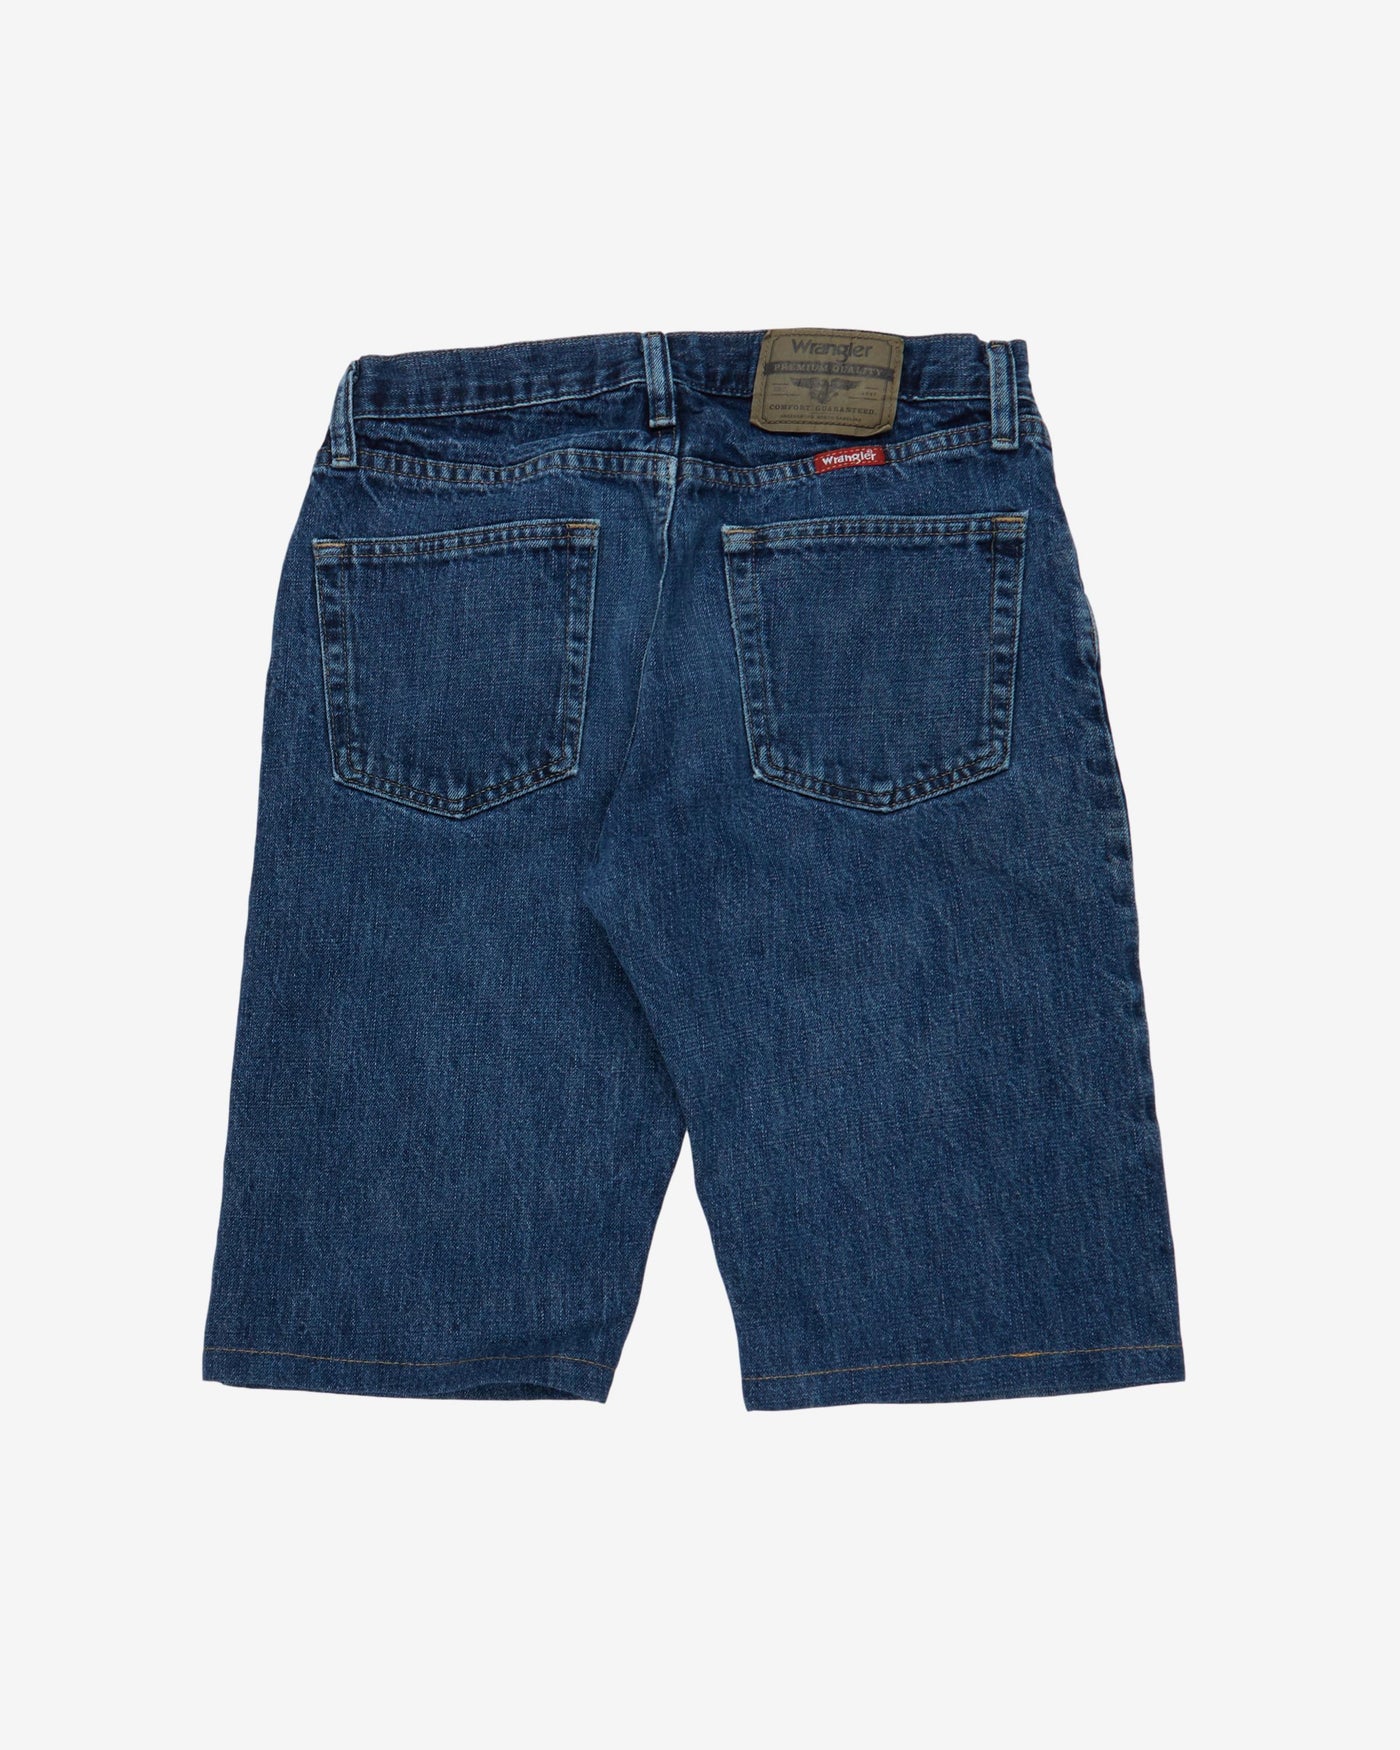 wrangler mid wash blue shorts - w29